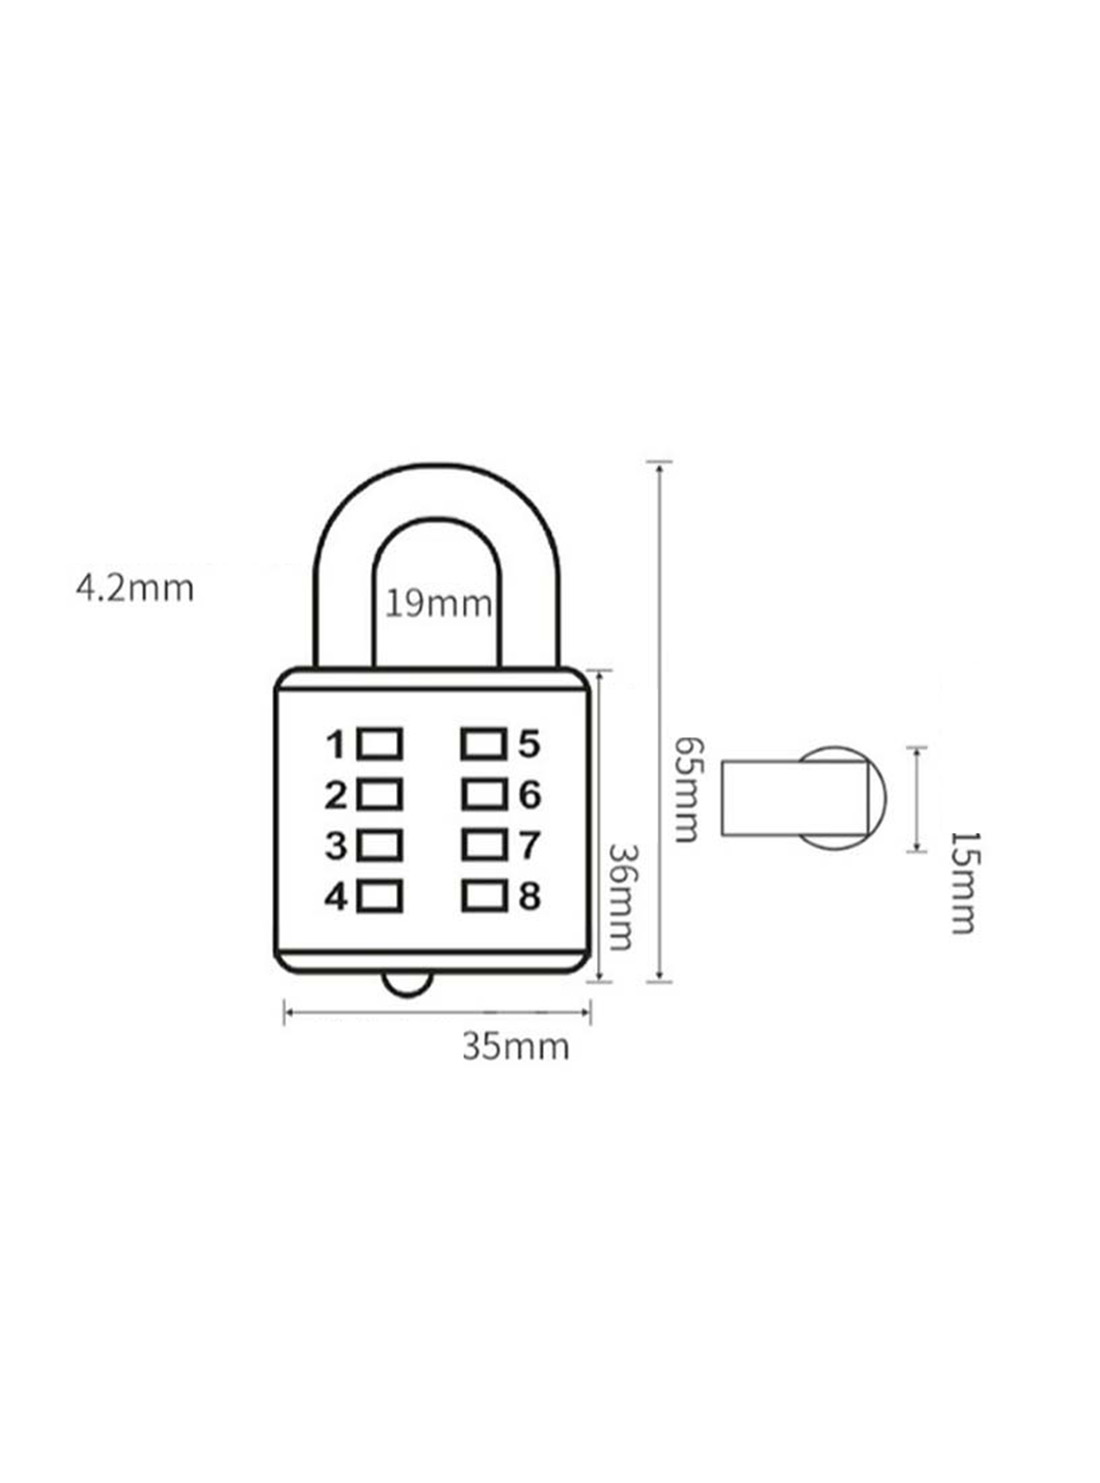 where to buy locks door key pad locks with logo printed